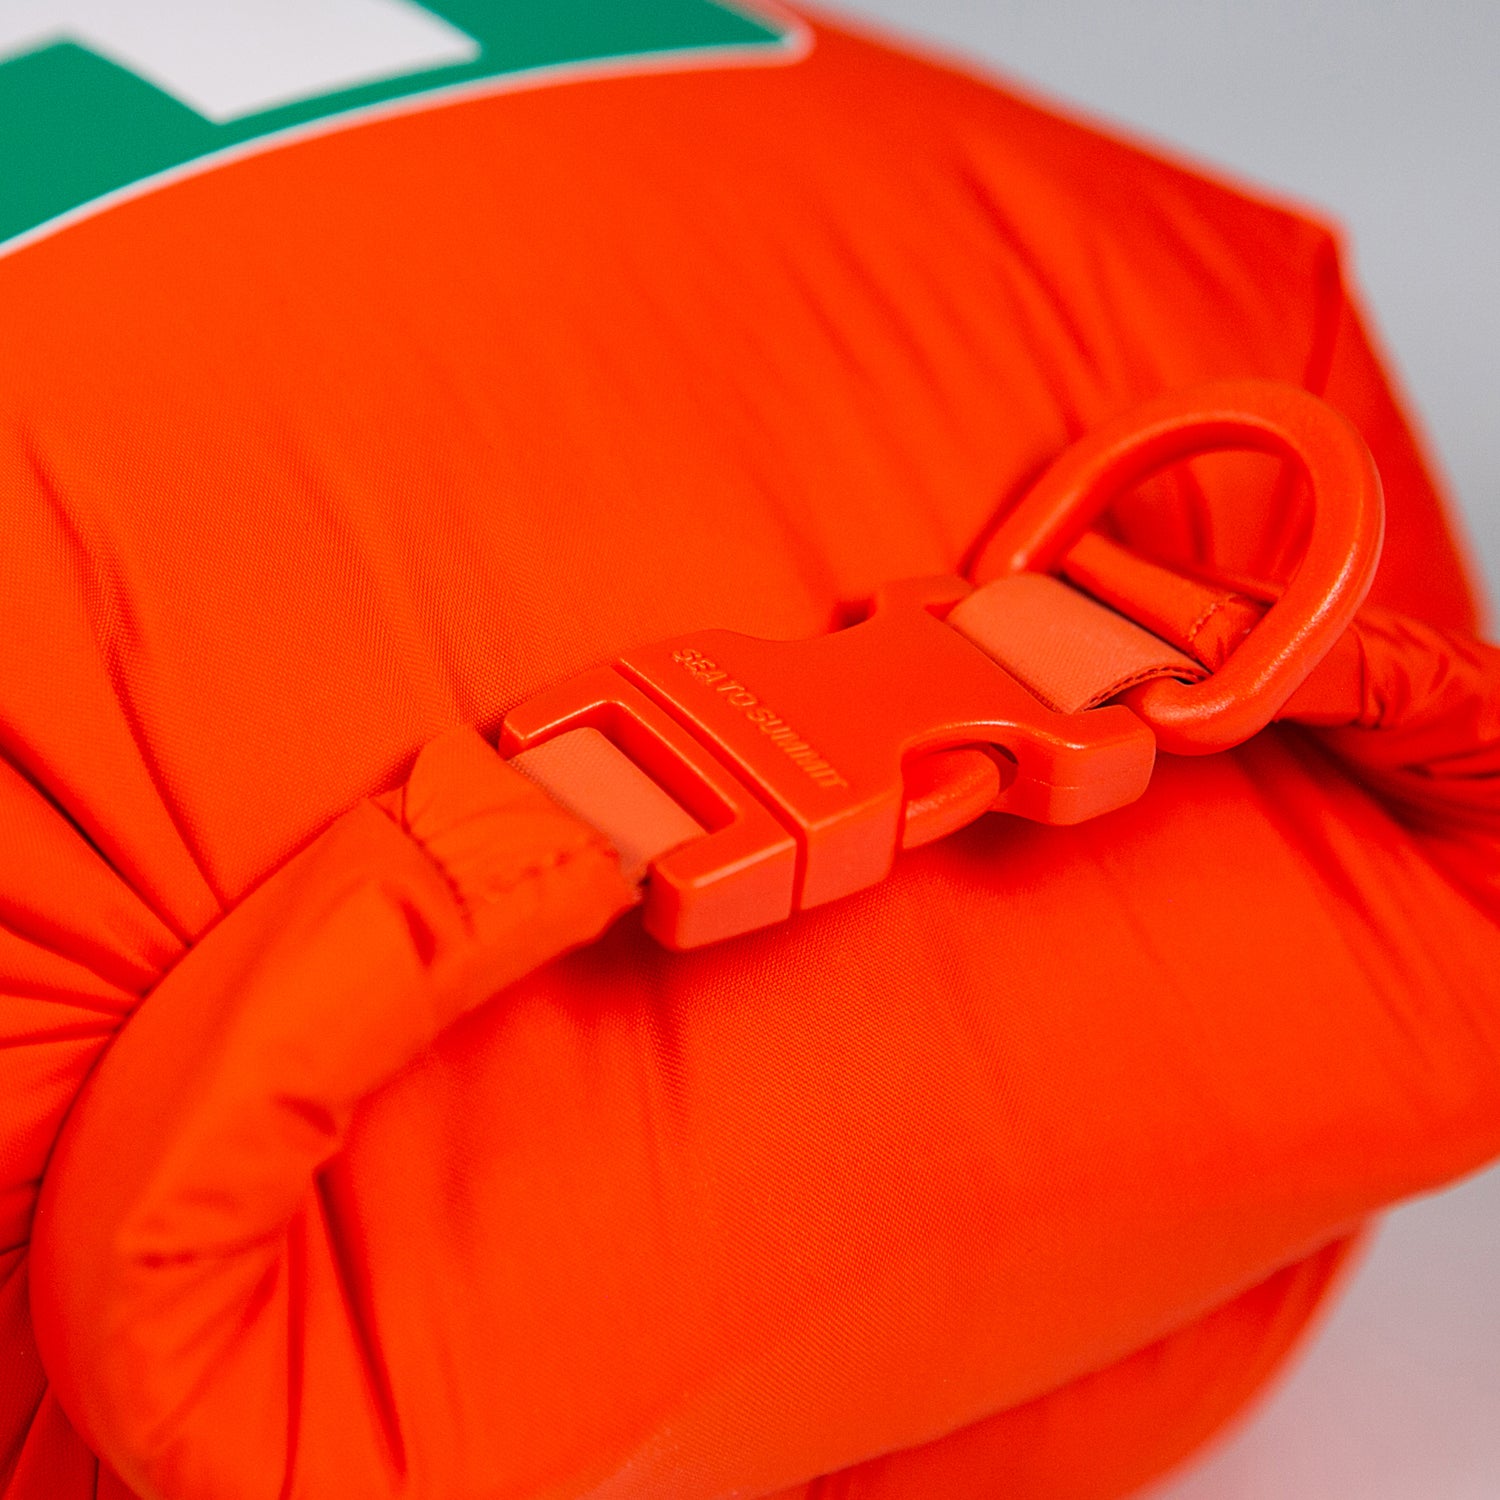 Lightweight Dry Bag First Aid - Erste Hilfe Dry Bag